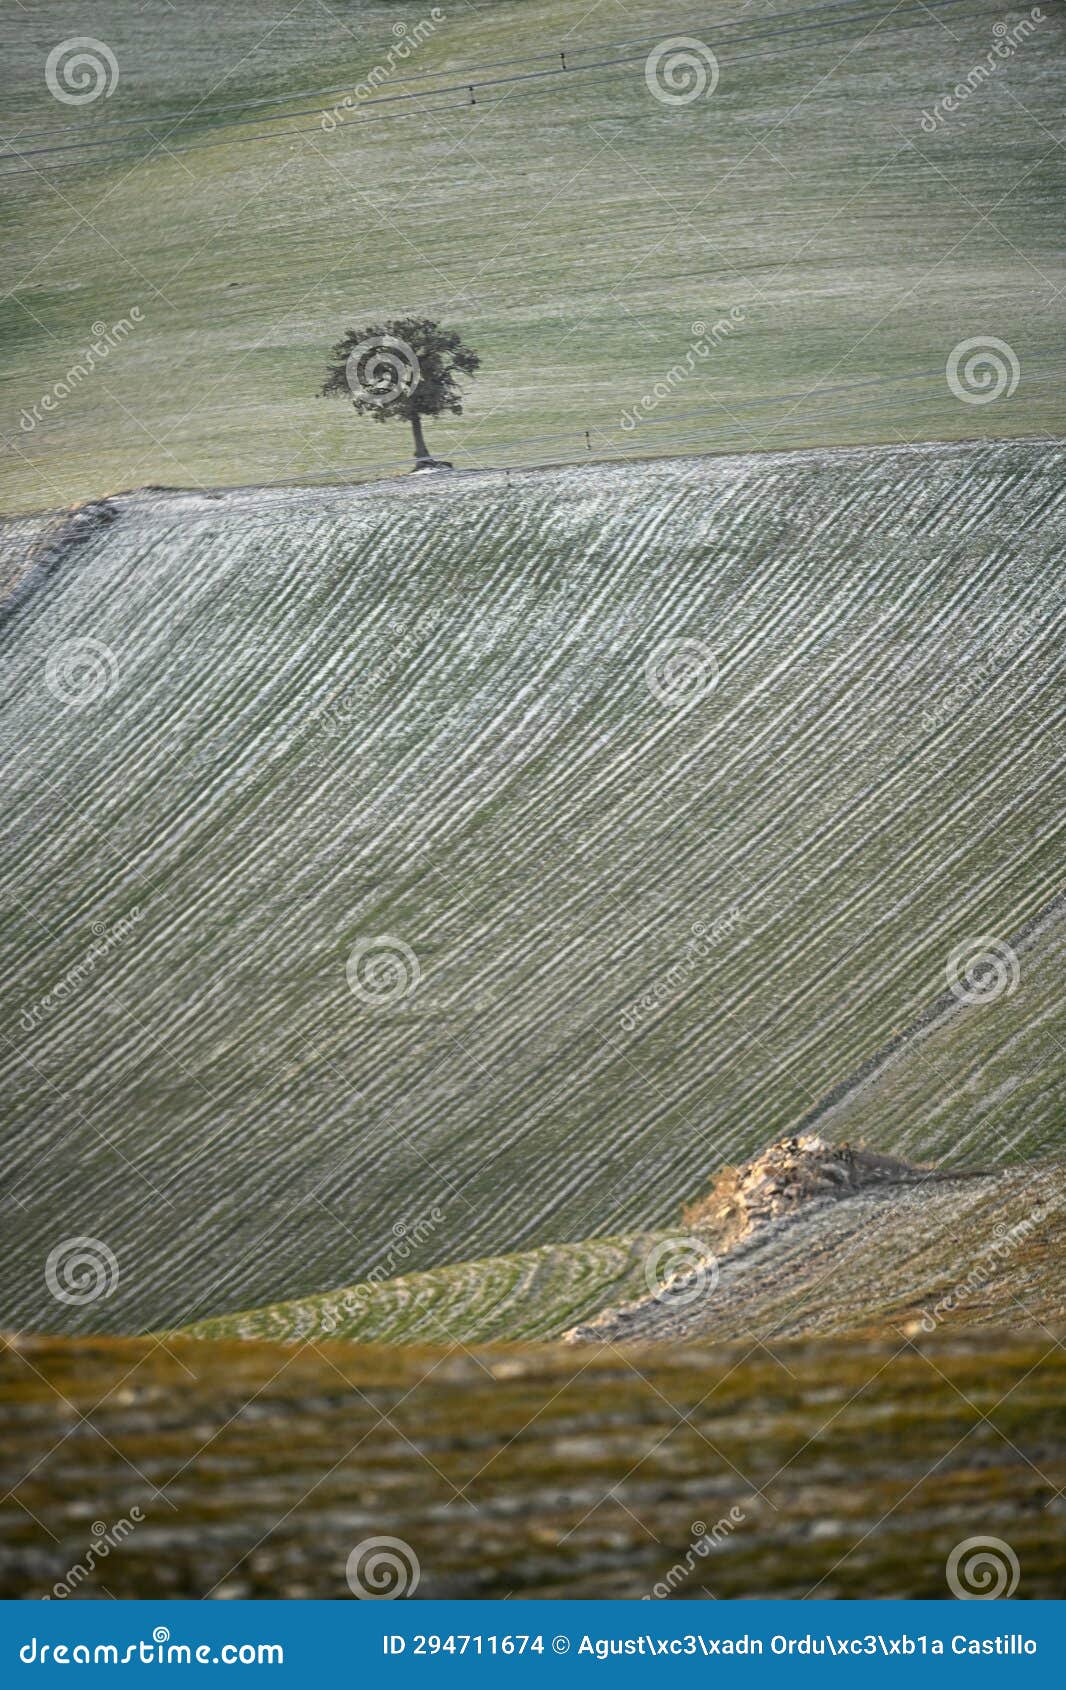 cerealistic landscape of the granada geopark.